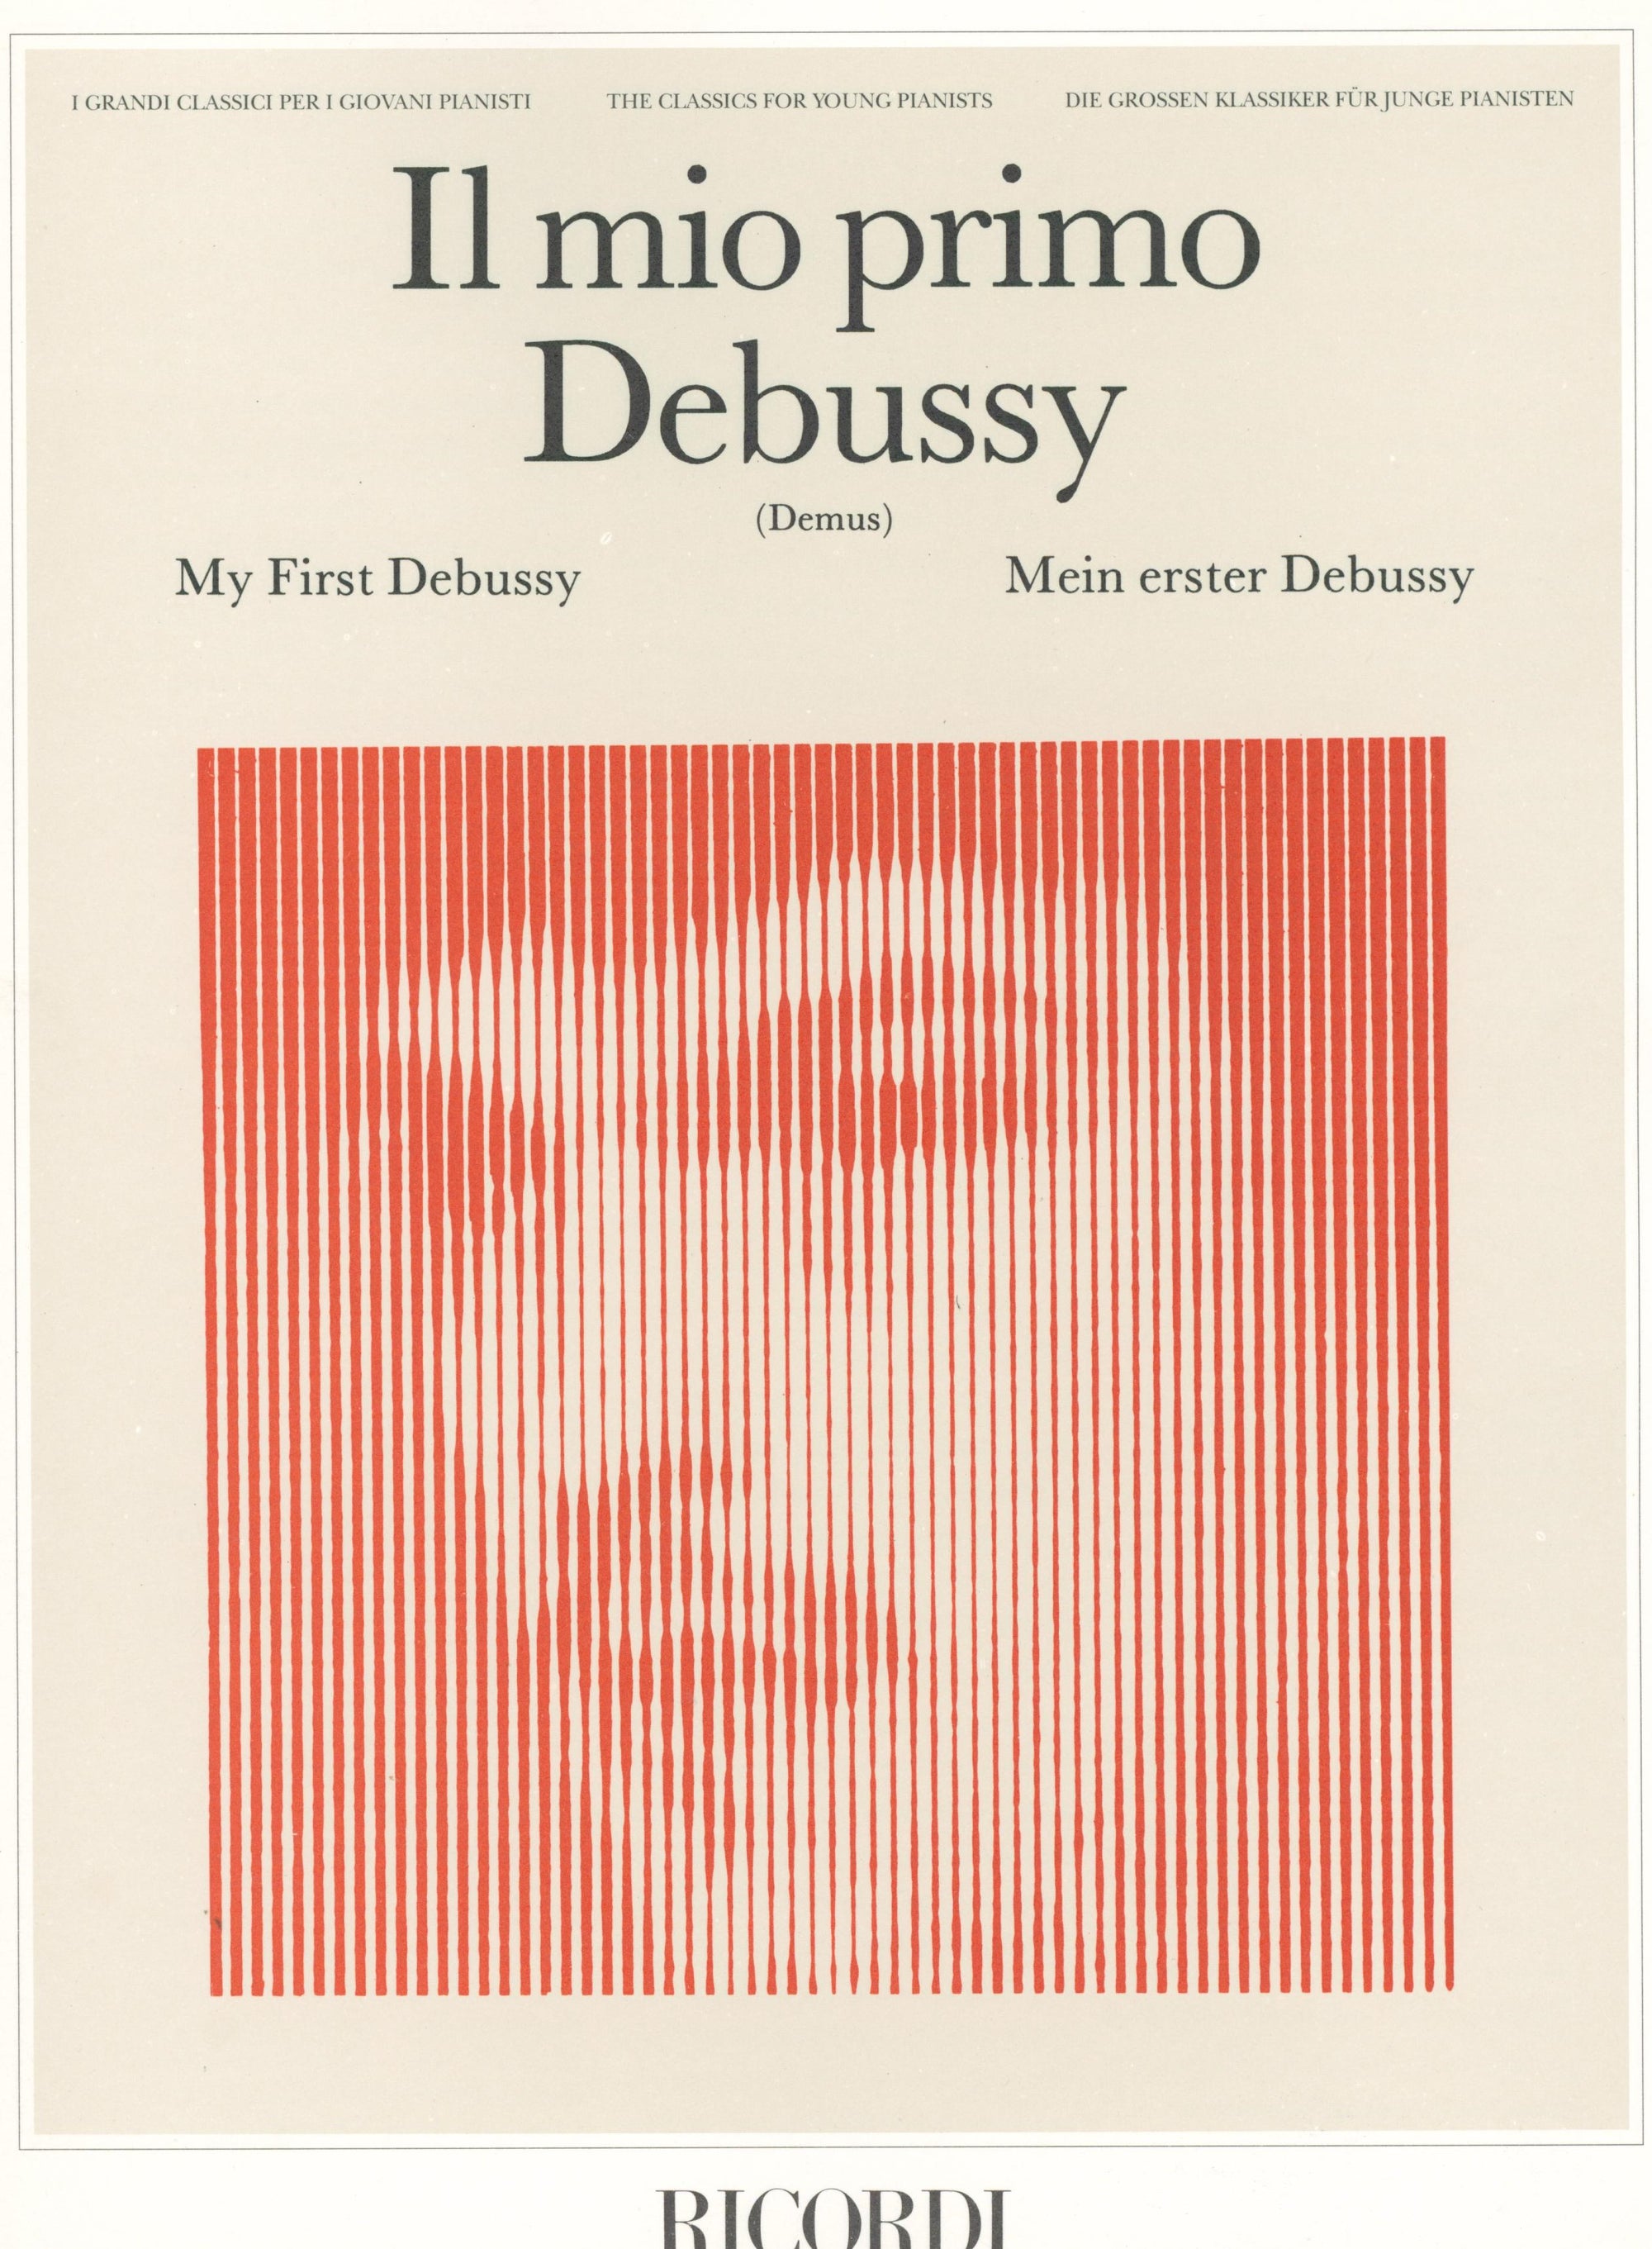 Debussy: La fille aux cheveux de lin (arr. for violin & piano) - Ficks Music